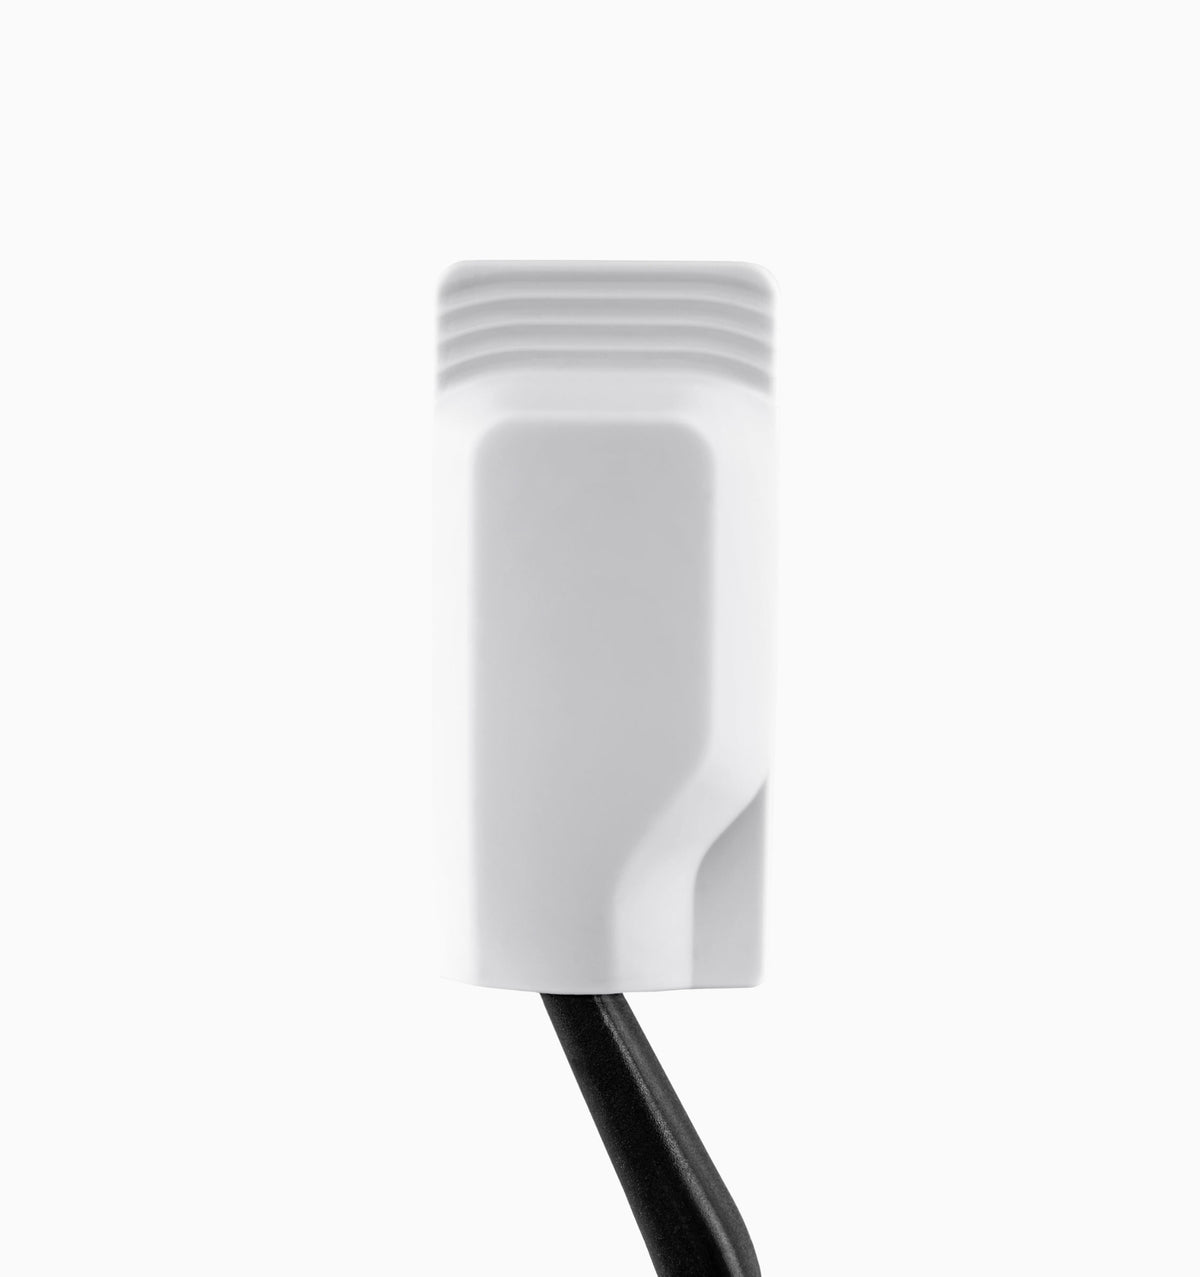 Matador Toothbrush Caps - 2 Pack - Black/White